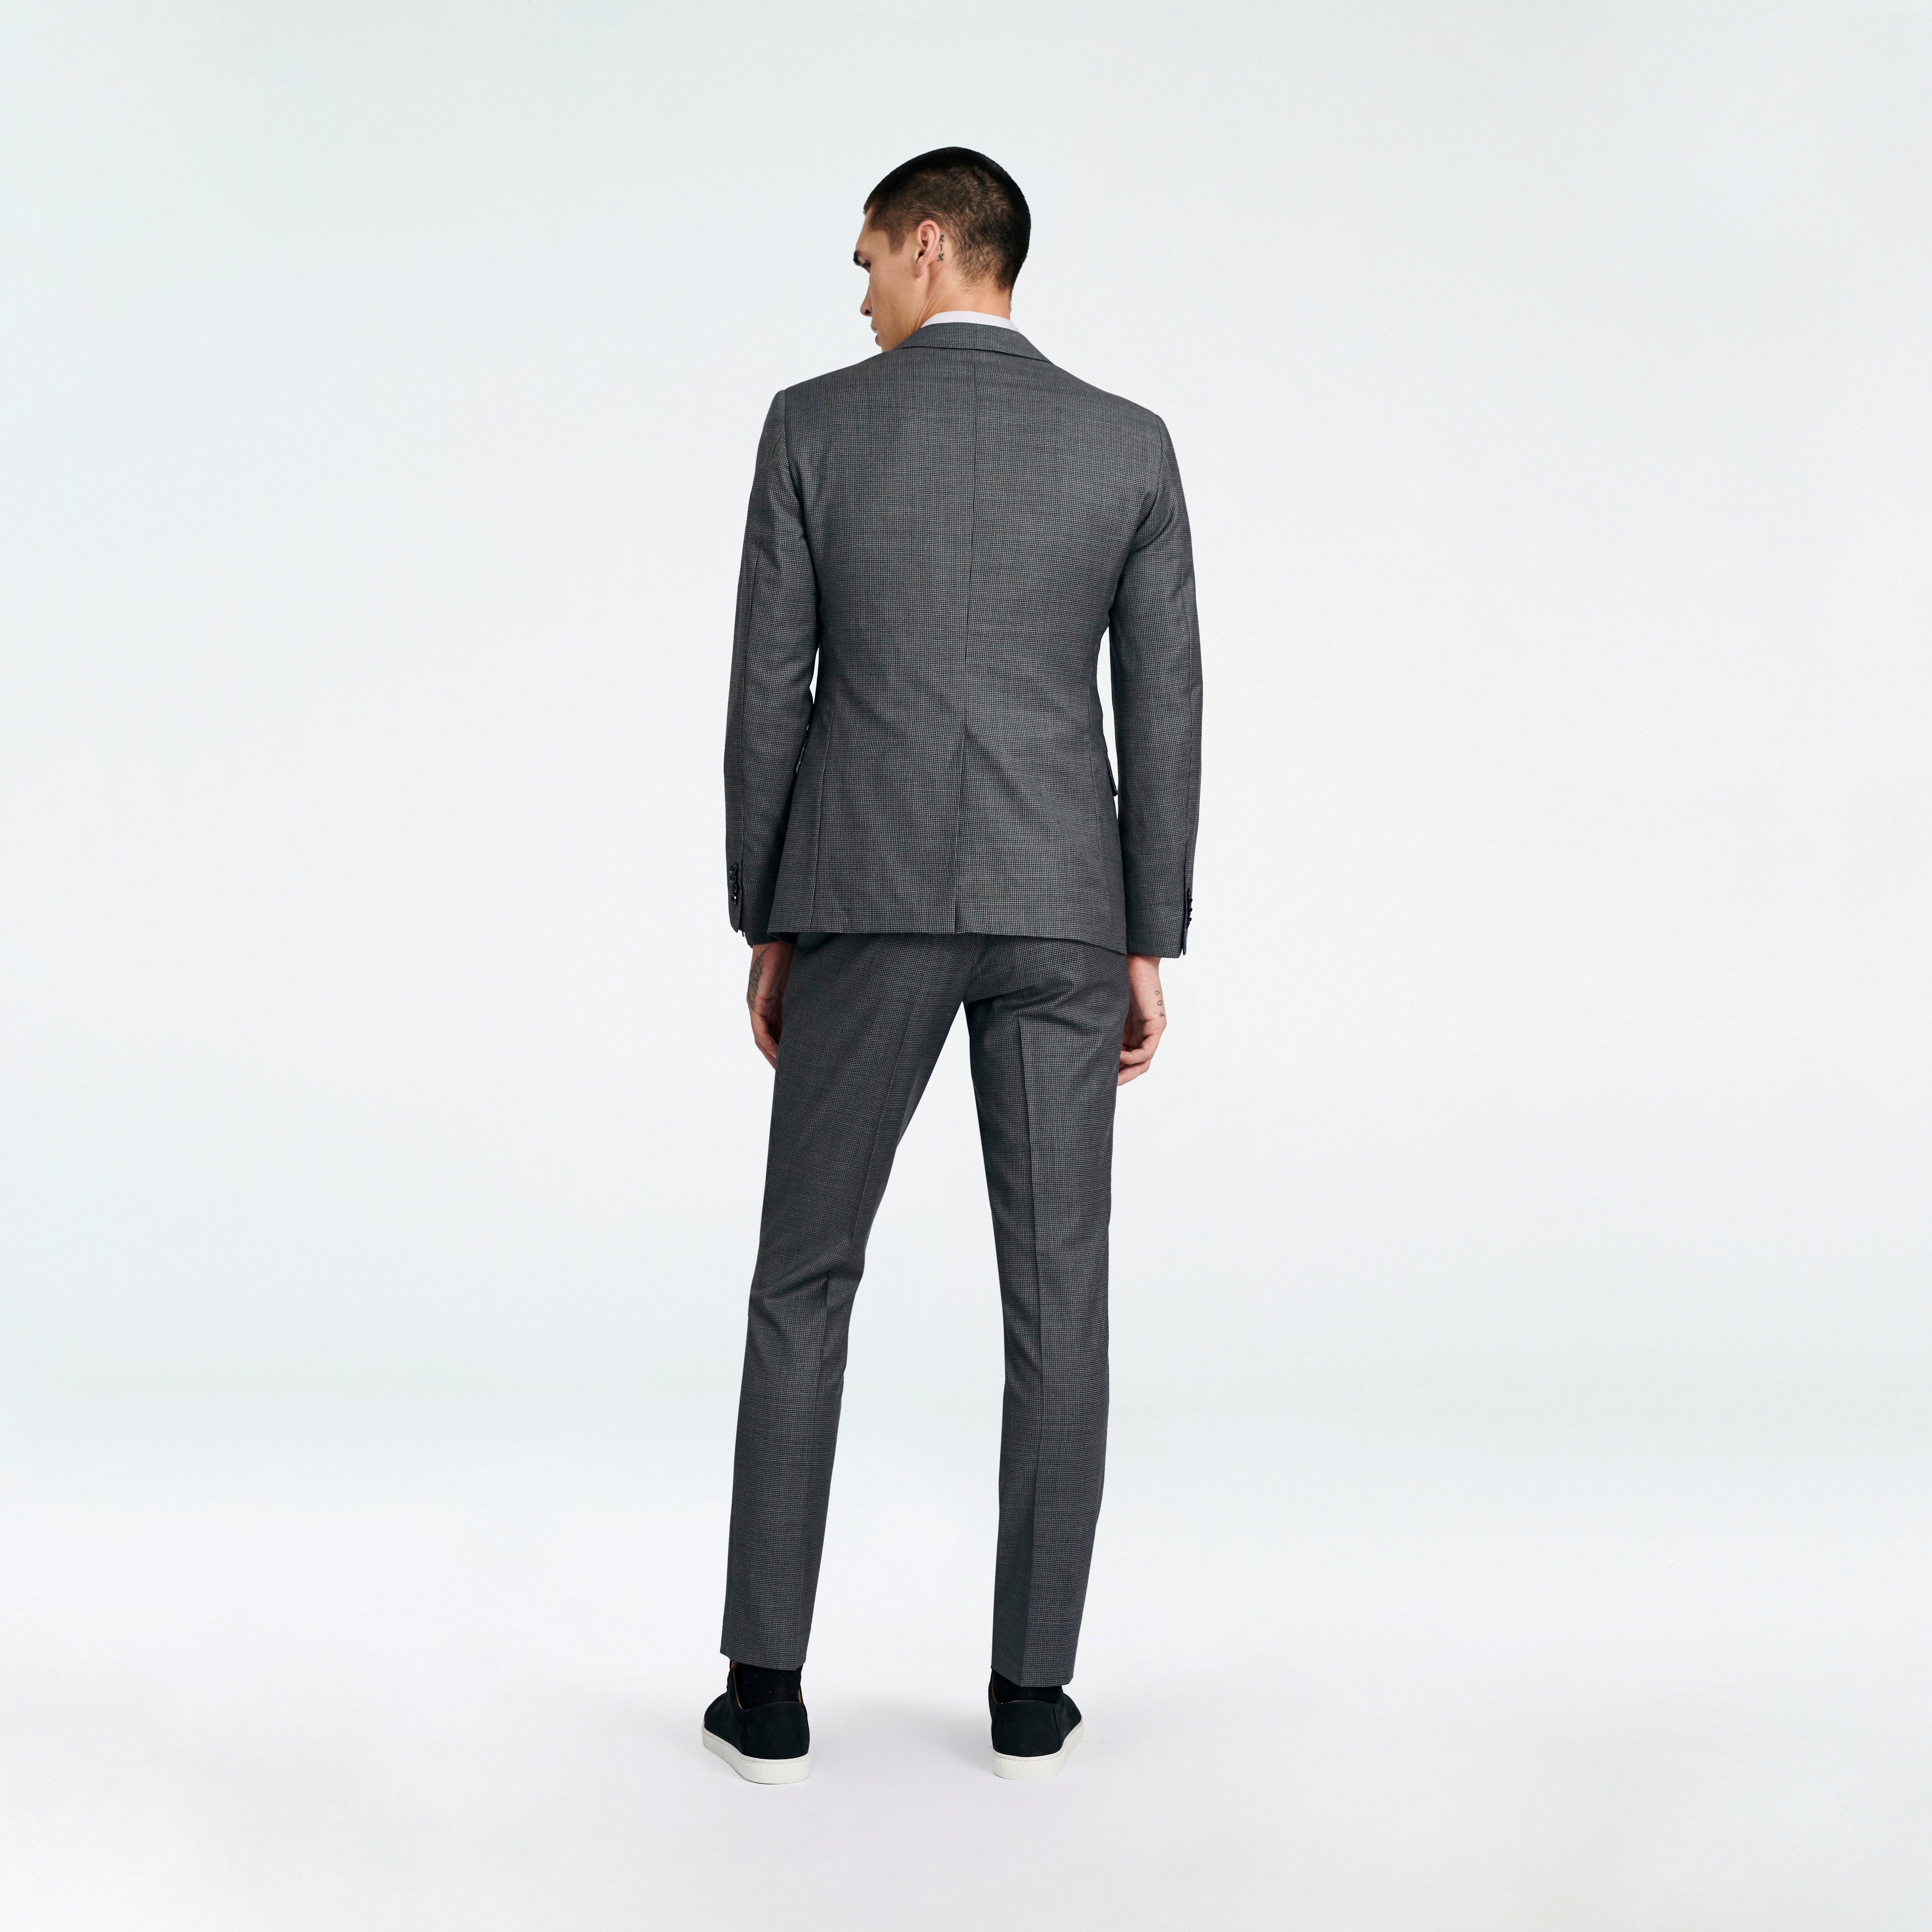 Malvern Houndstooth Gray Suit